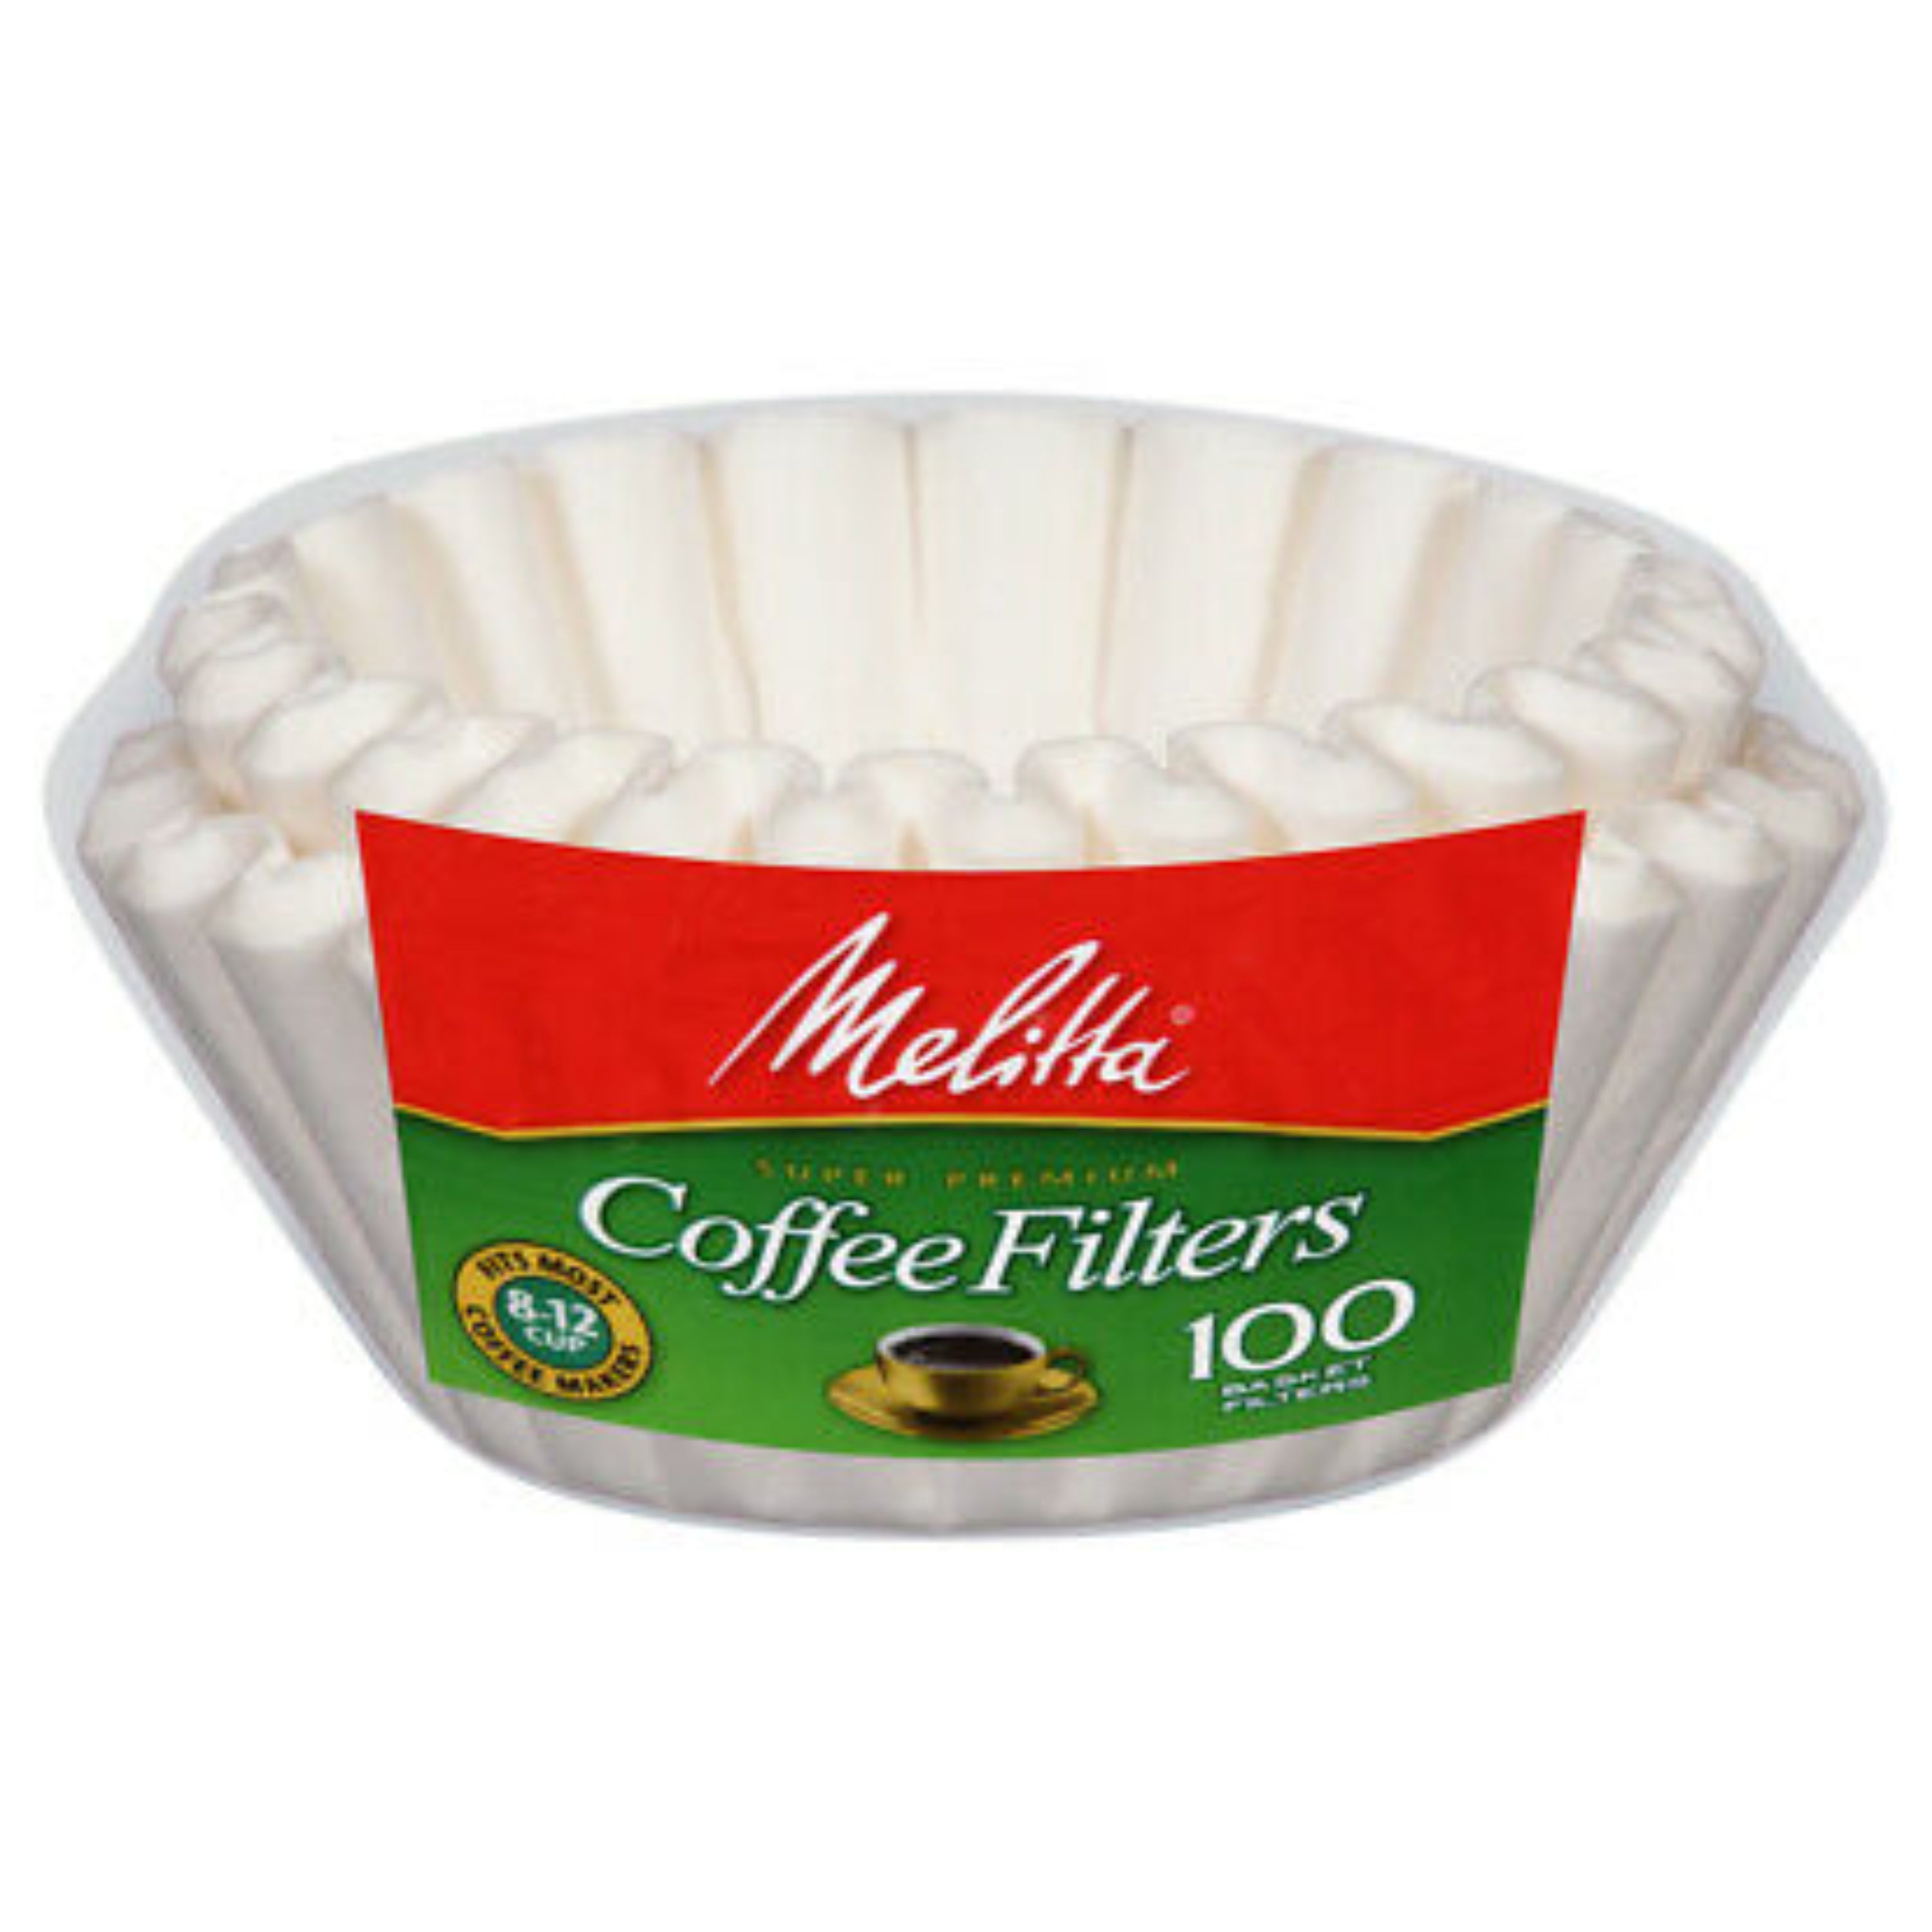 Melitta Super Premium 8-12 Cup White Basket Coffee Filters – 100 Count